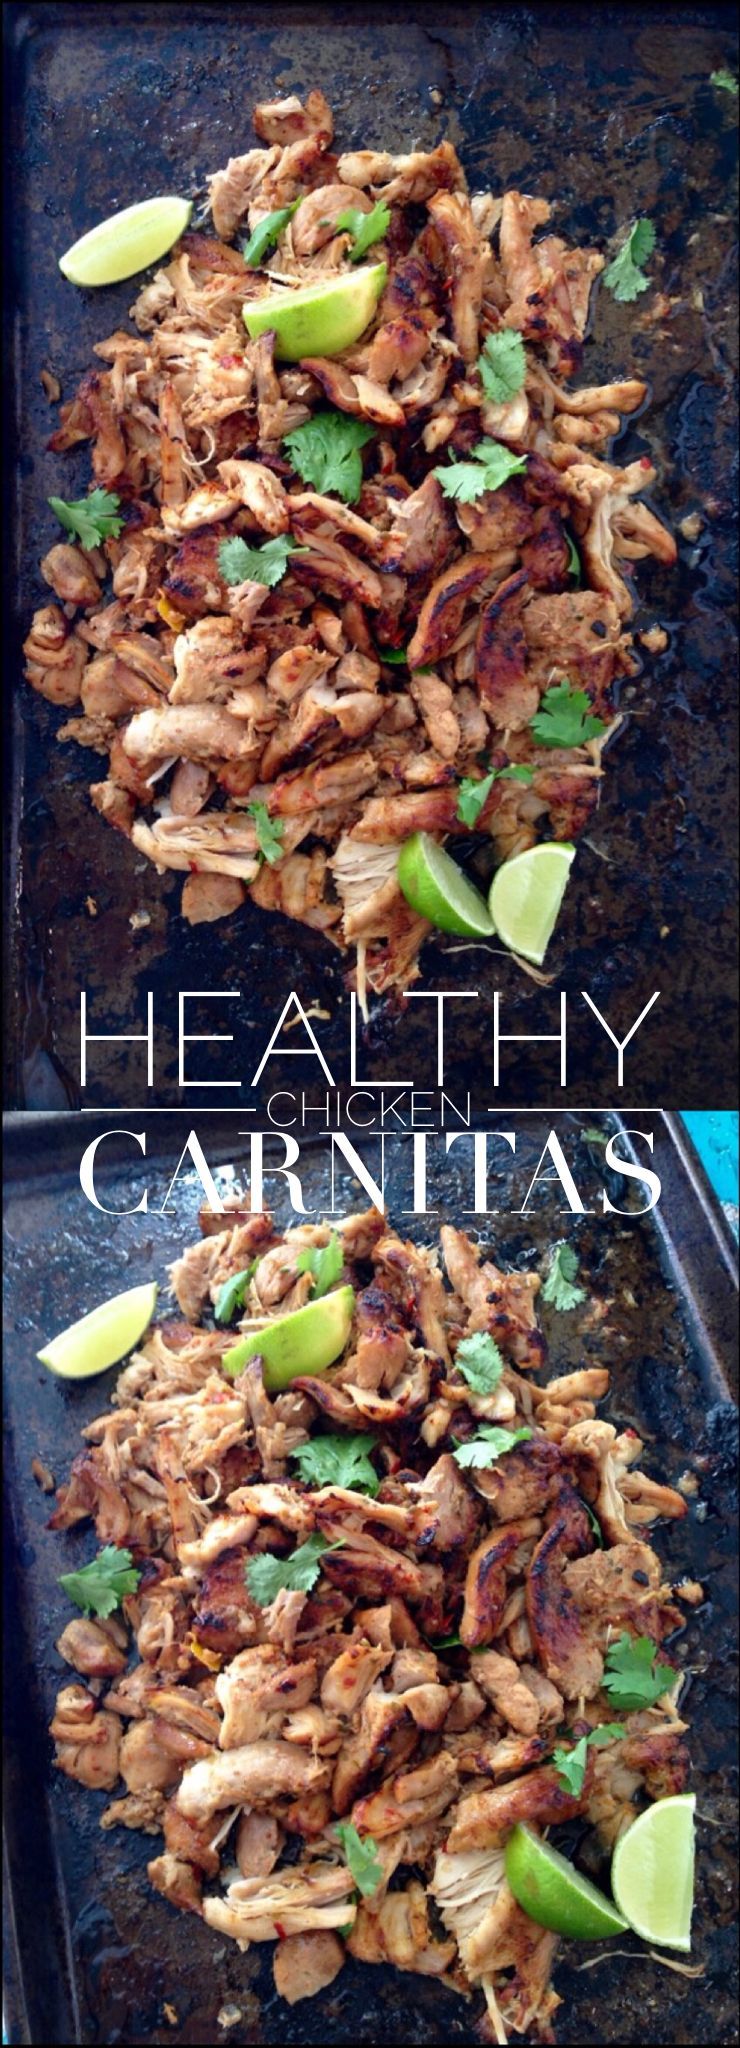 22 healthy recipes mexican
 ideas